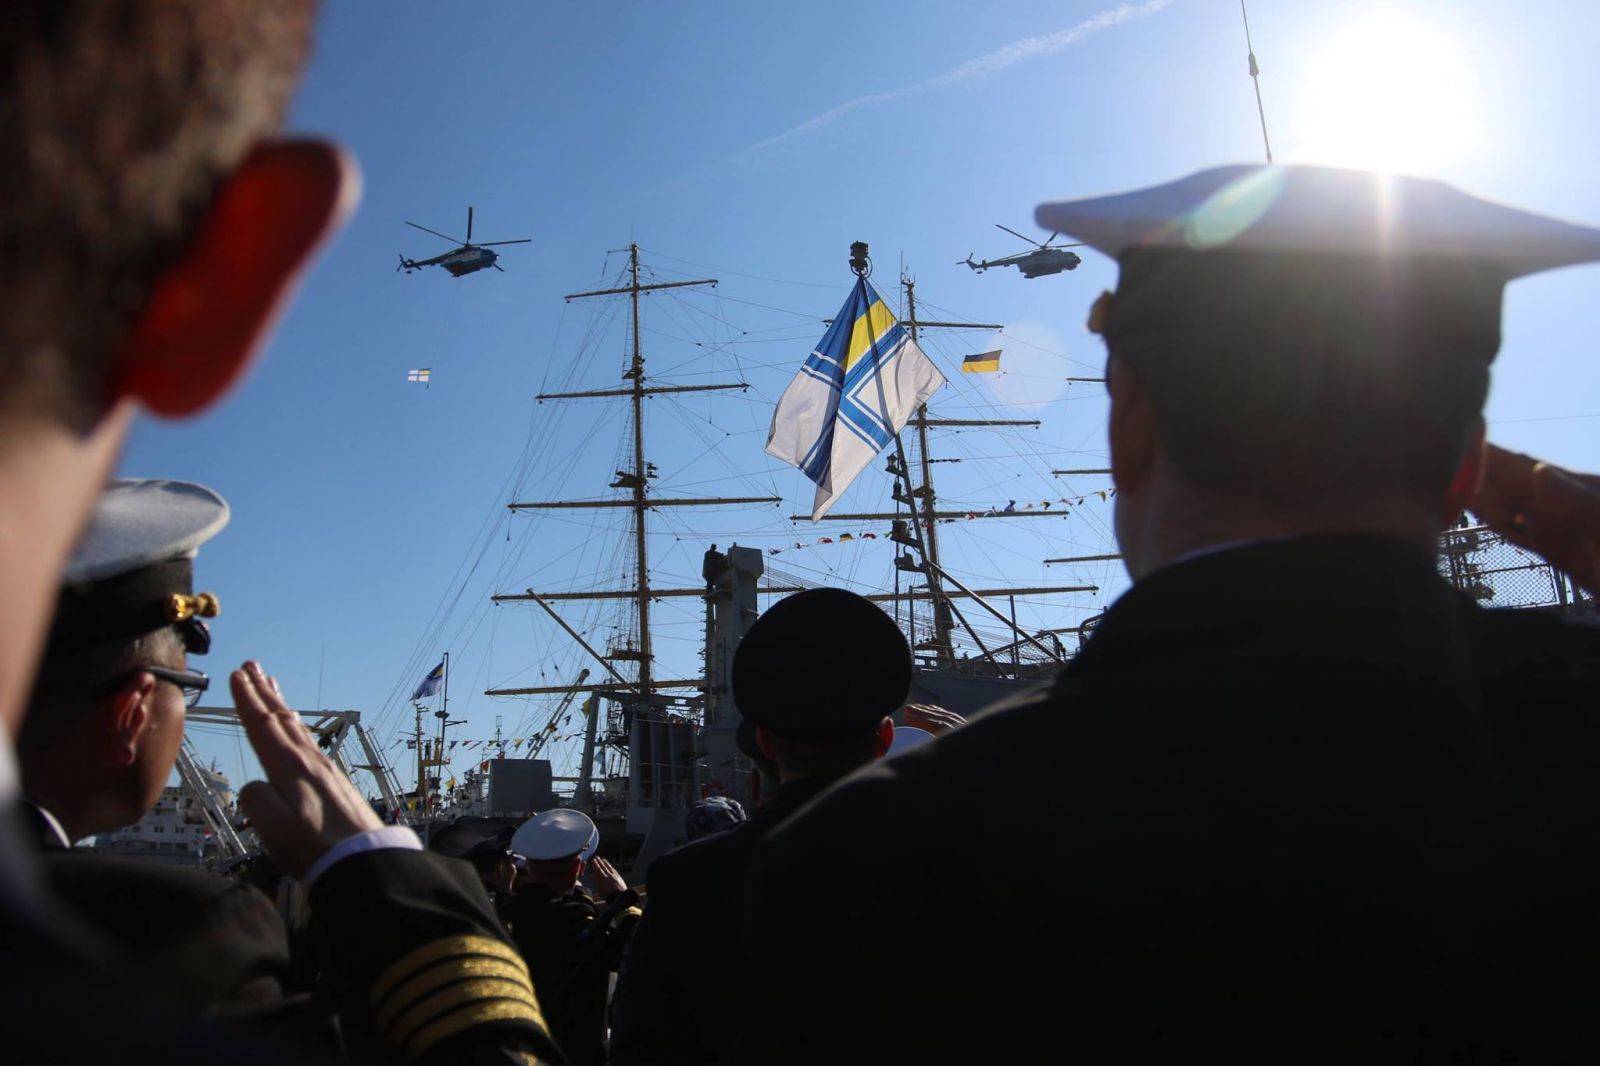  Над патрульними катерами «Старобільськ» і «Слов’янськ» урочисто підняли прапори ВМС України, фото Facebook